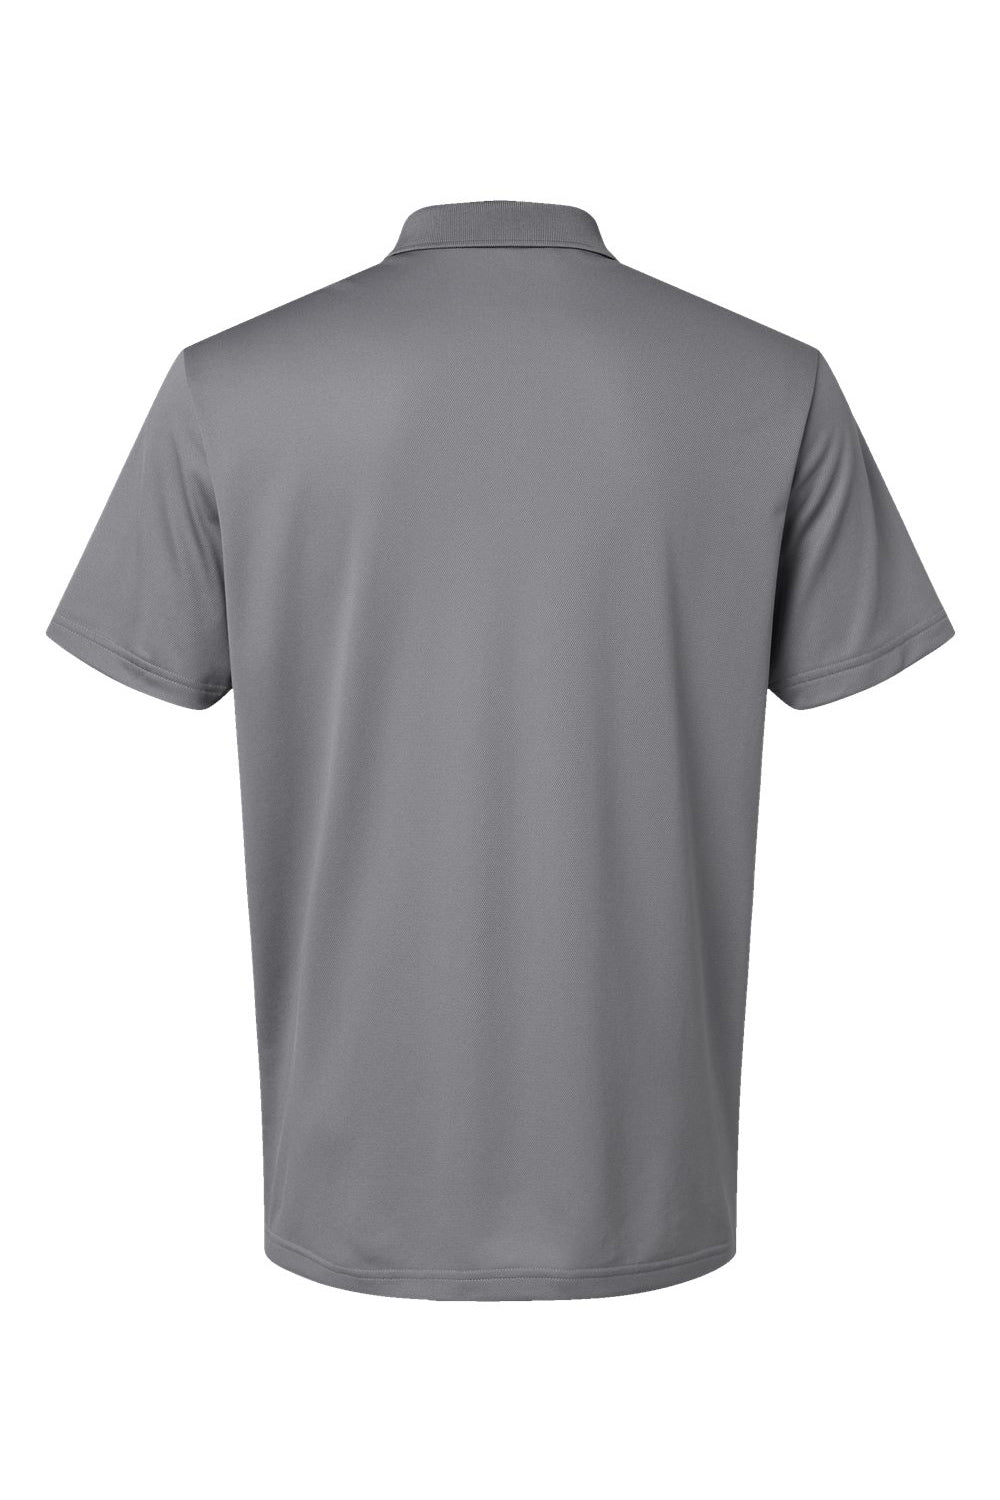 Adidas A430 Mens Basic Short Sleeve Polo Shirt Grey Flat Back